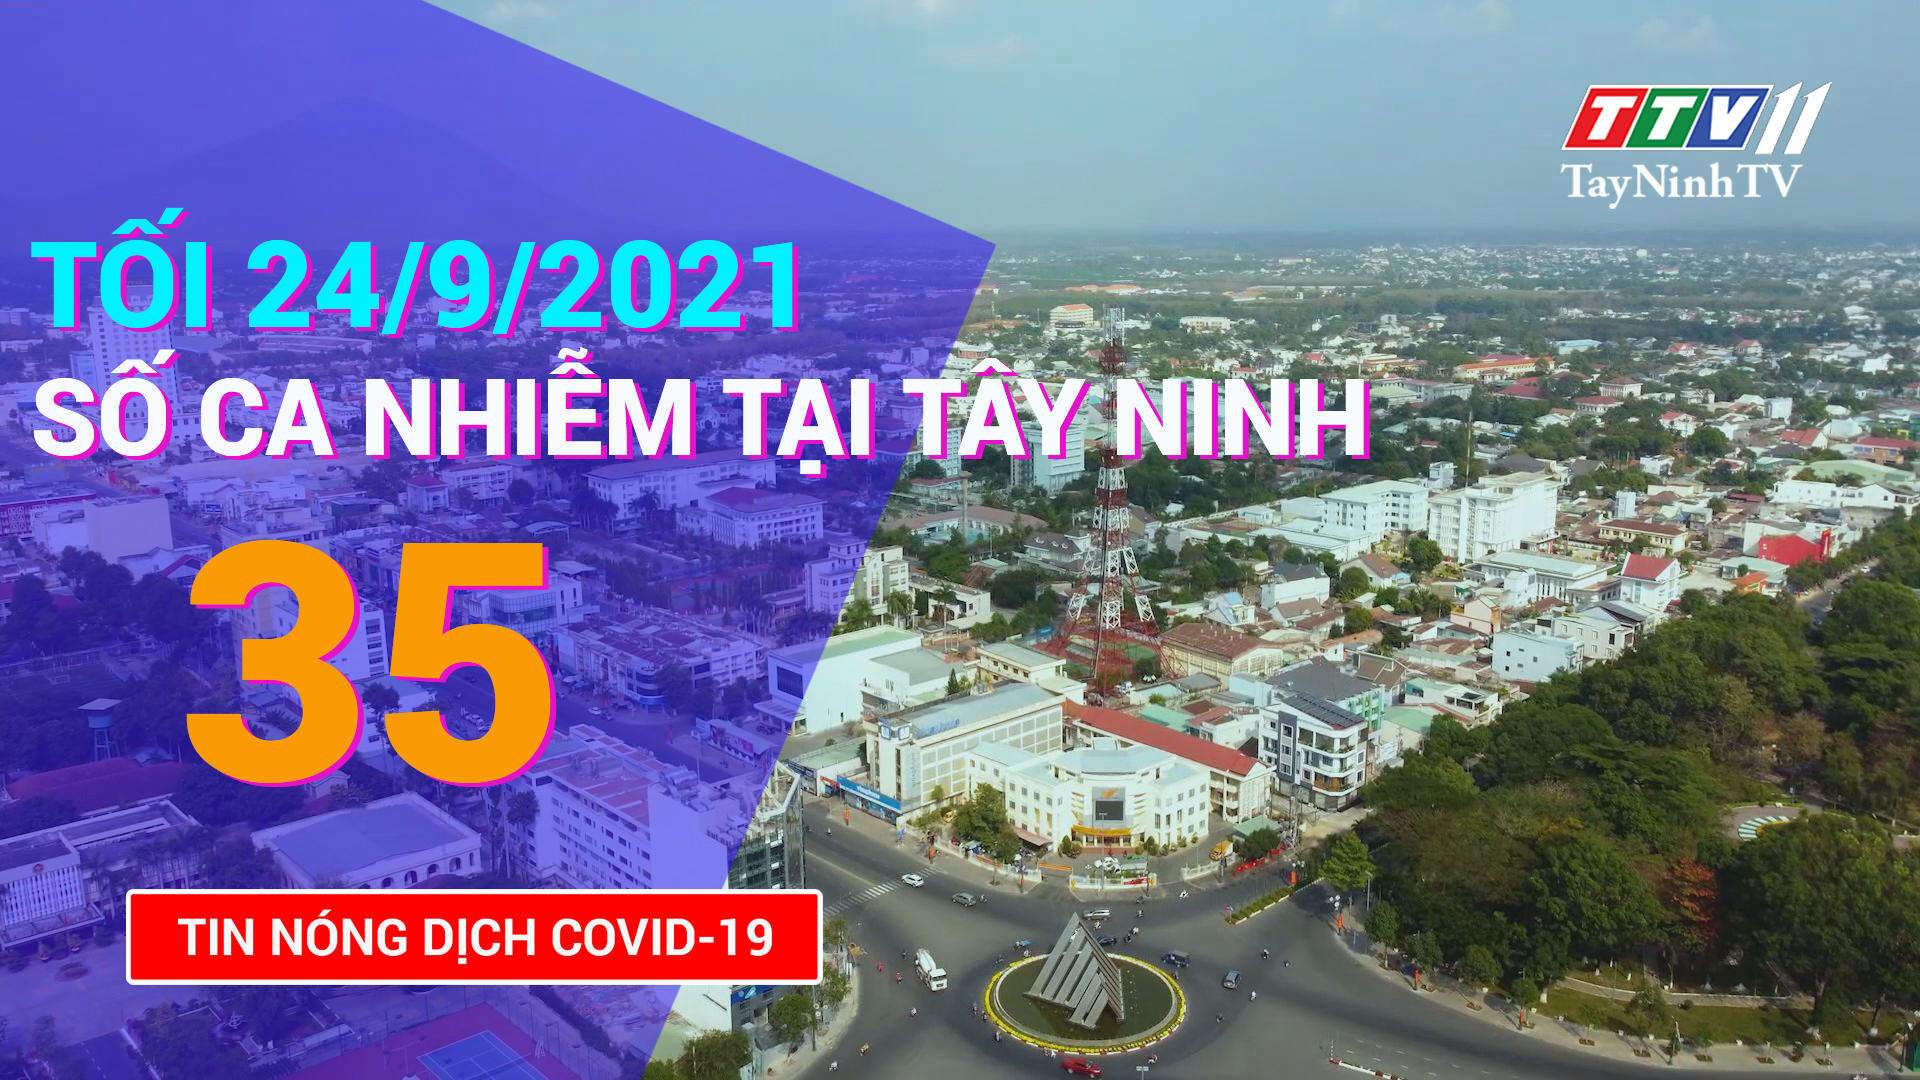 Tin tức Covid-19 tối 24/9/2021 | TayNinhTV